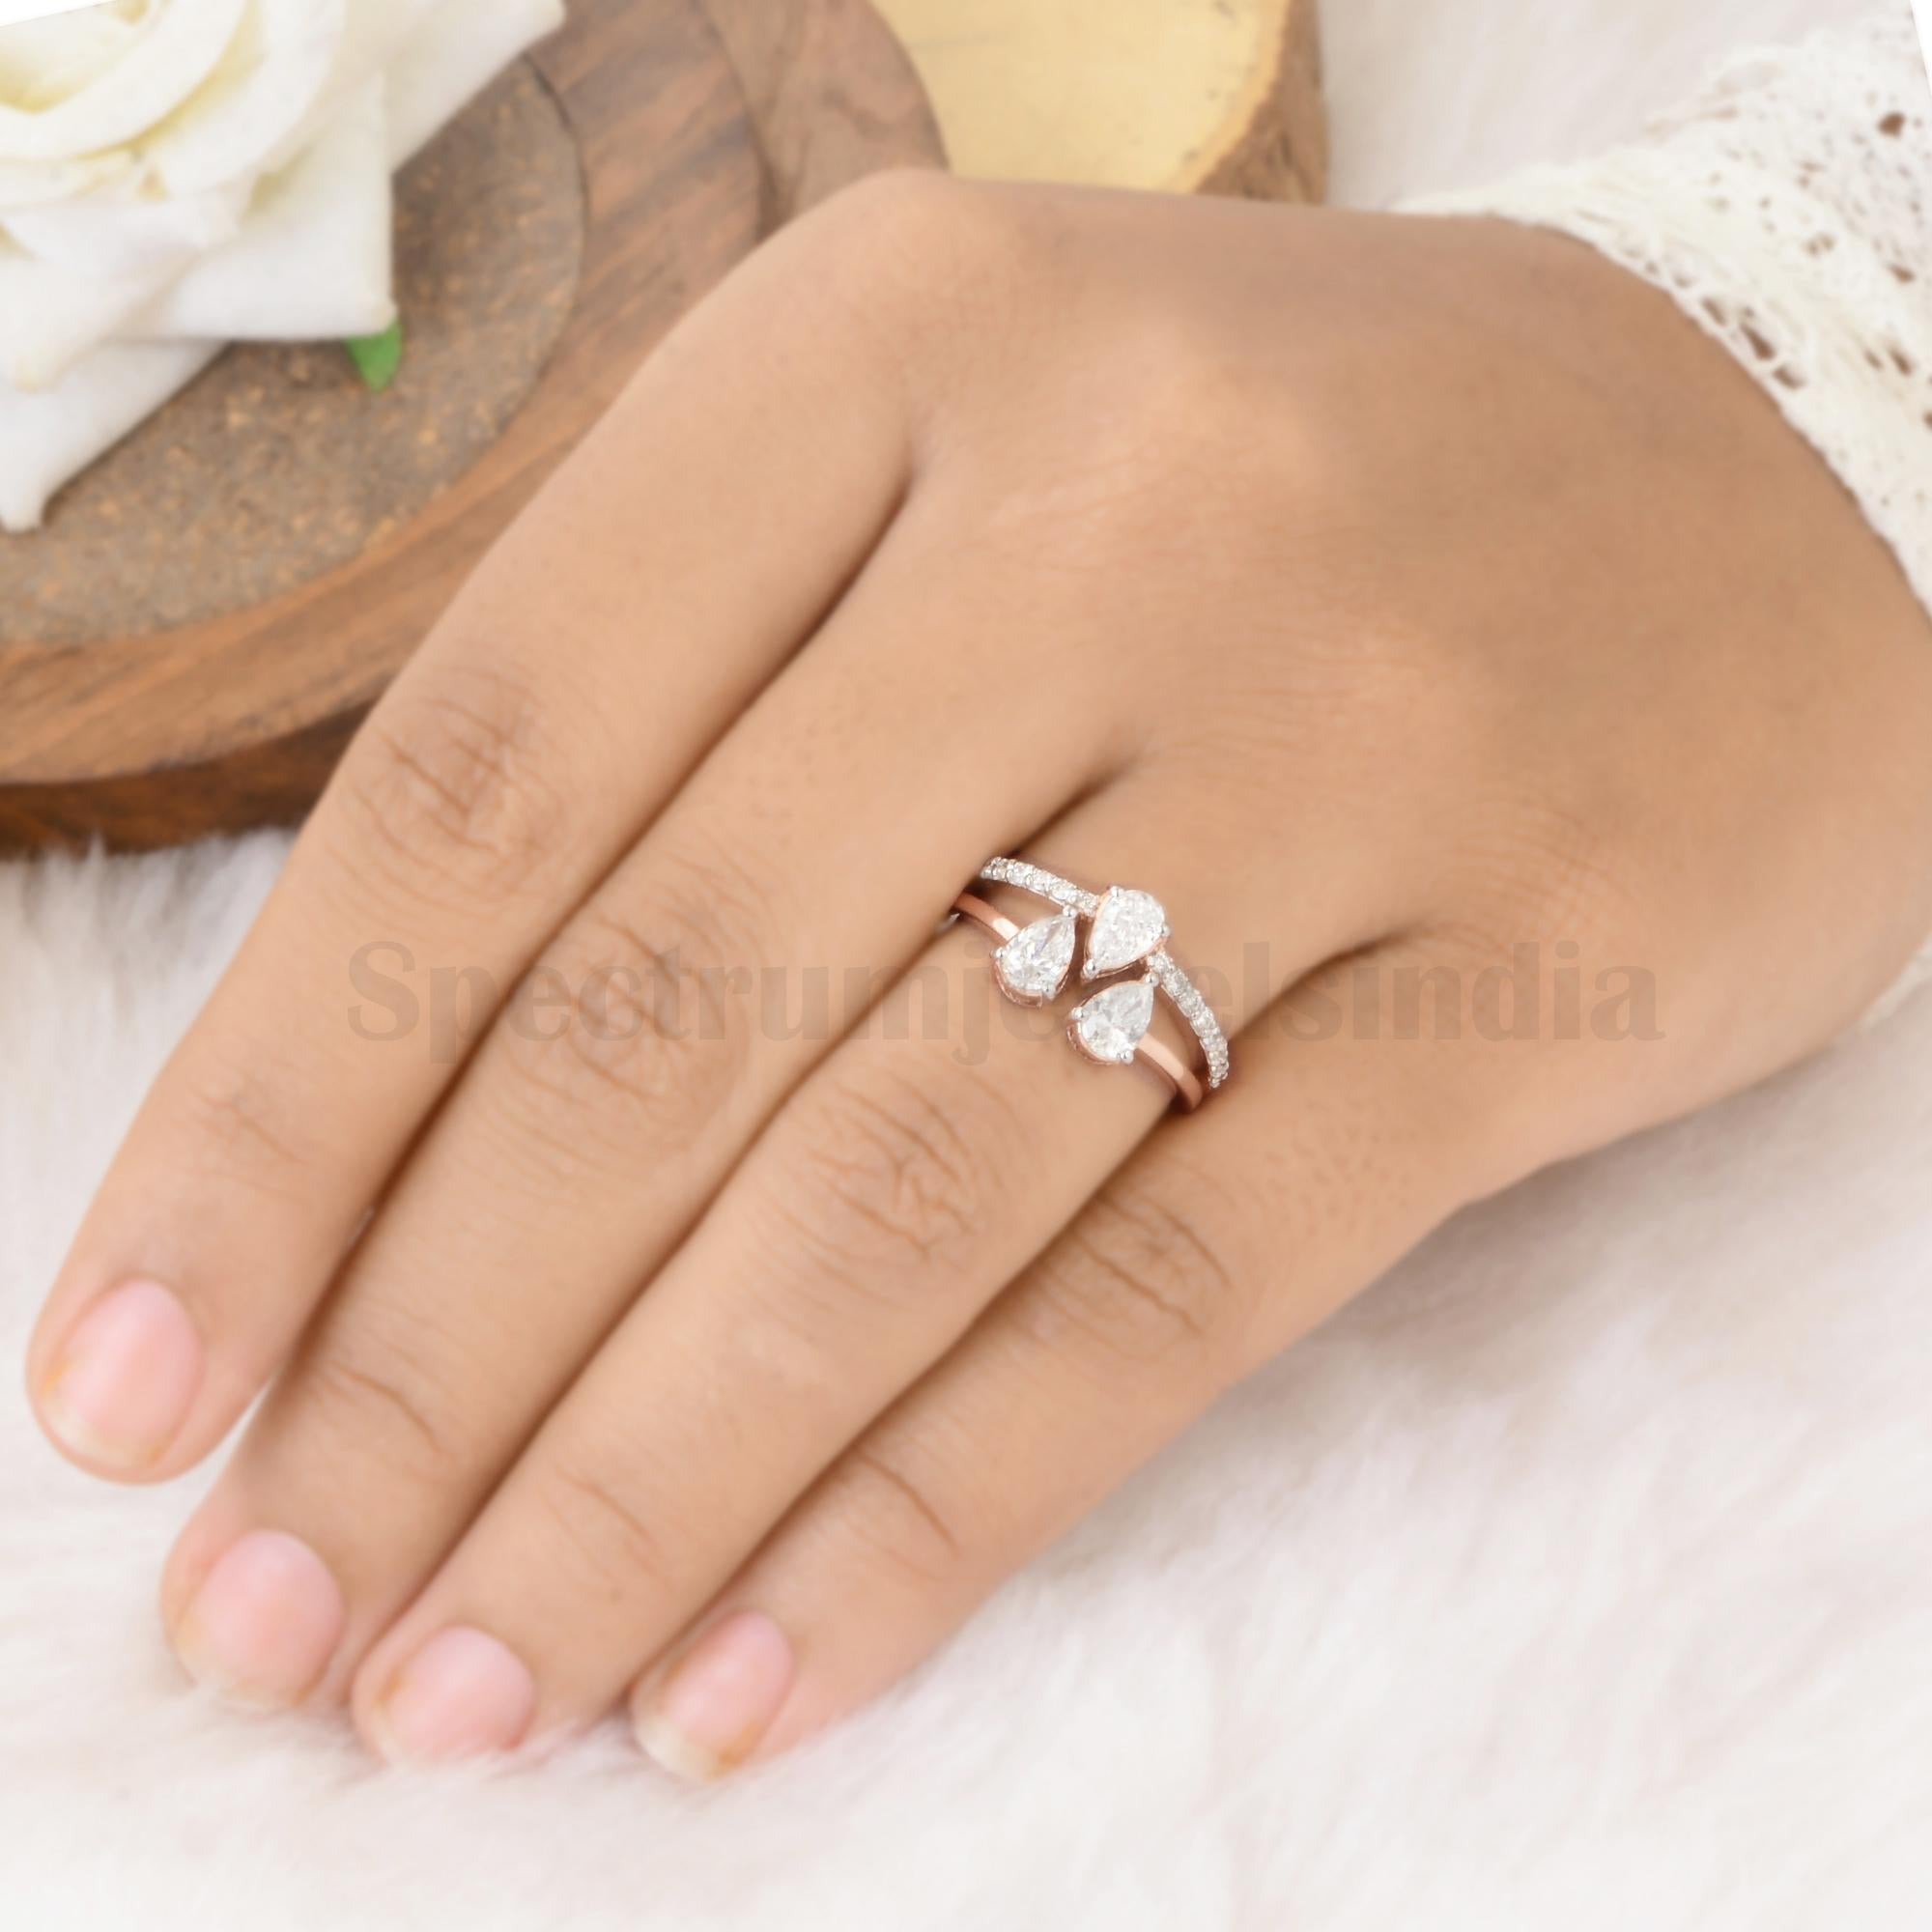 Women's Real 0.90 Carat Pear Diamond Wedding Ring Solid 18k Yellow Gold Handmade Jewelry